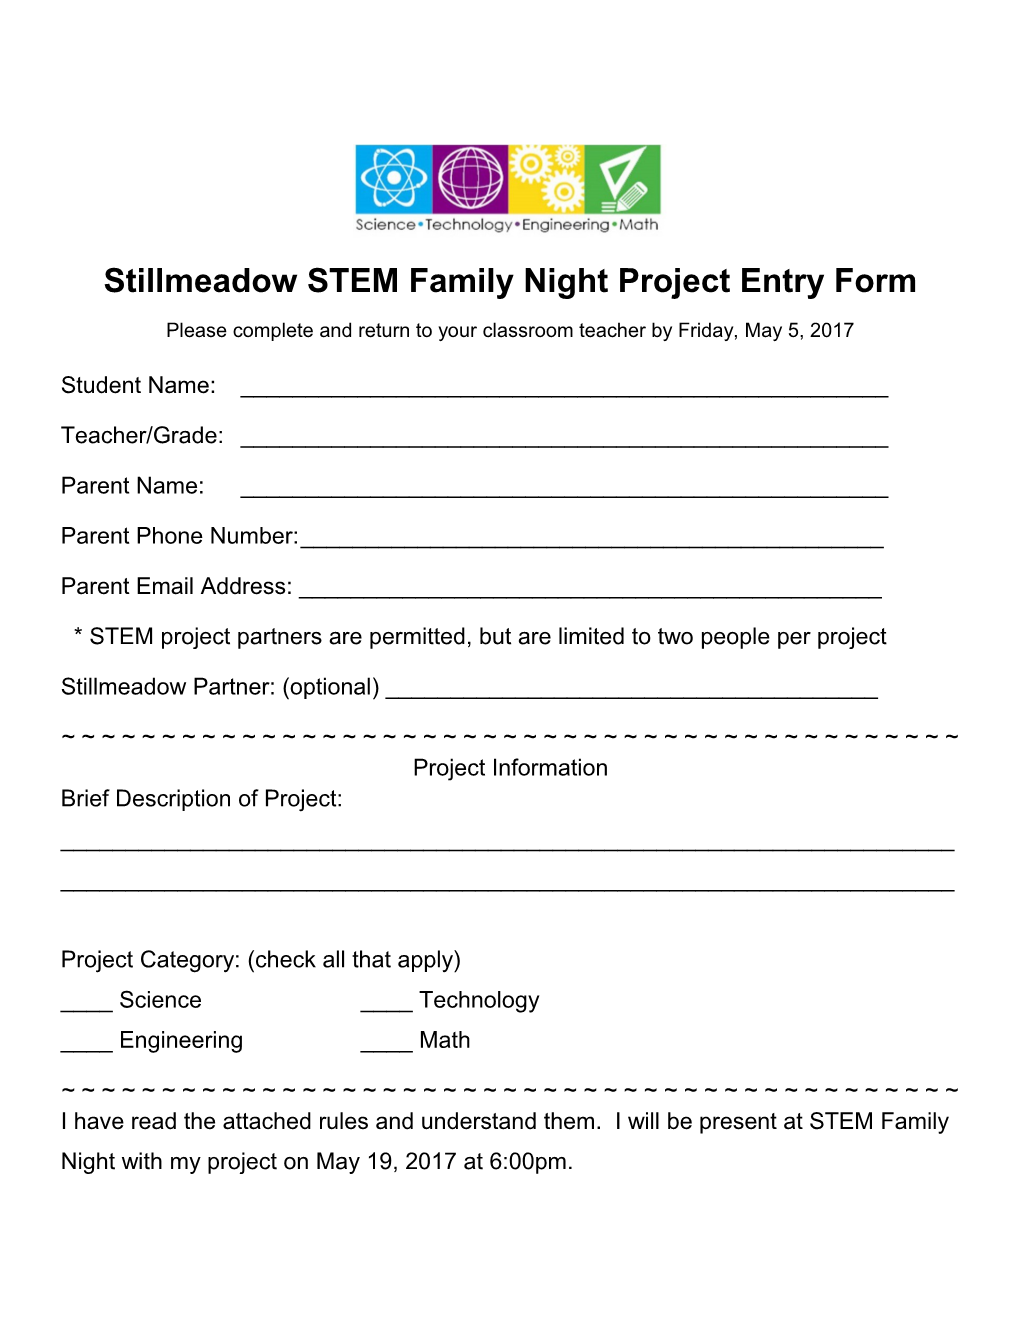 Stillmeadow STEM Family Night Project Entry Form